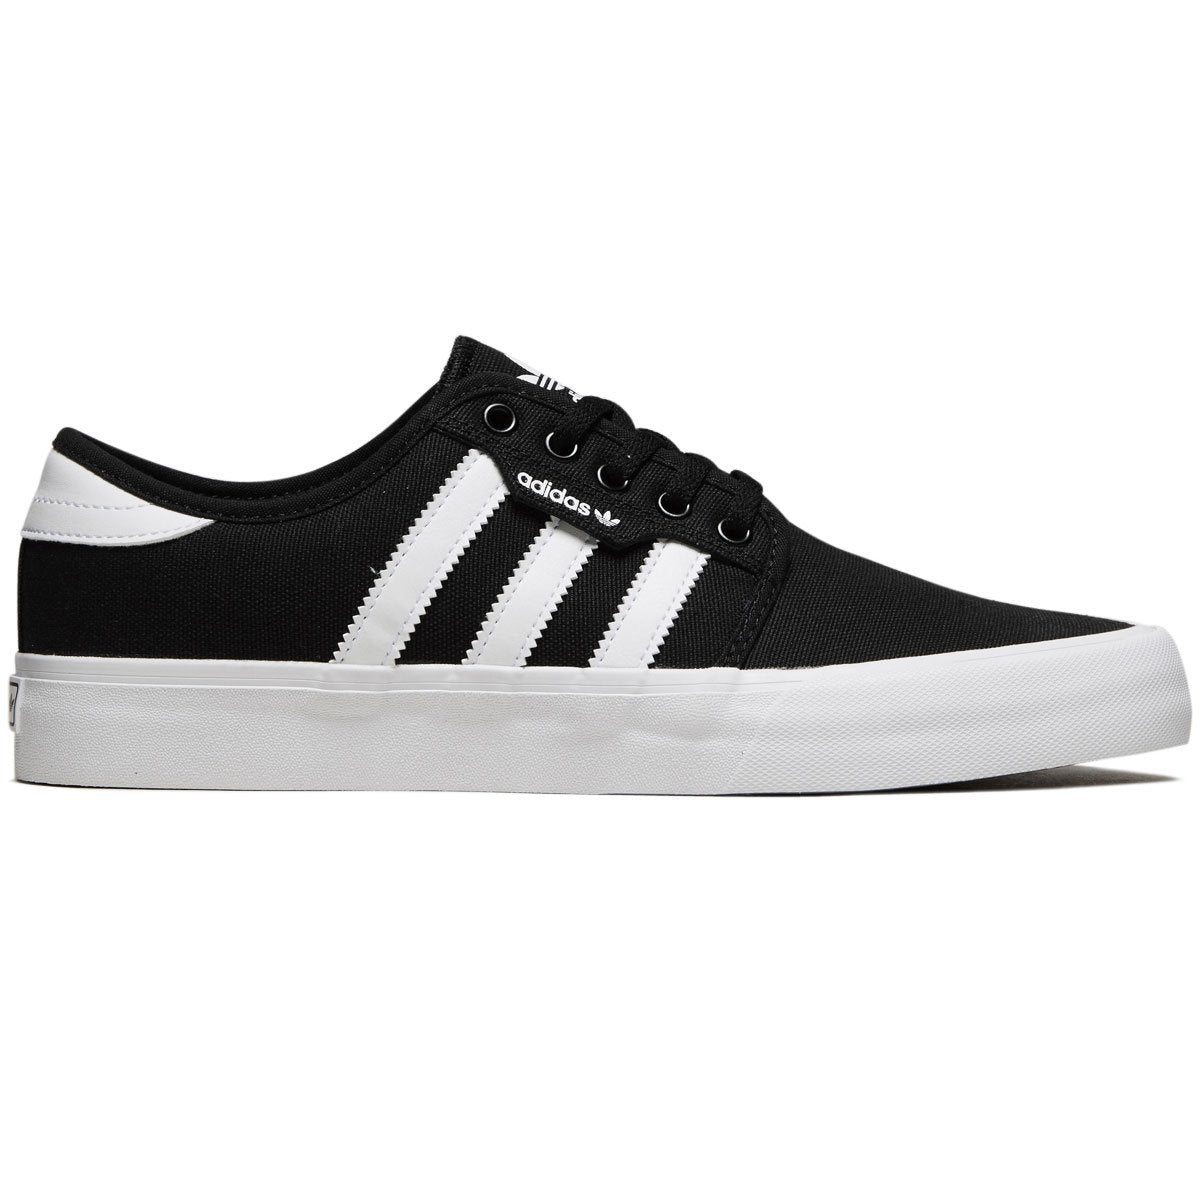 Adidas Seeley Xt Shoes - Core Black/White/White image 1